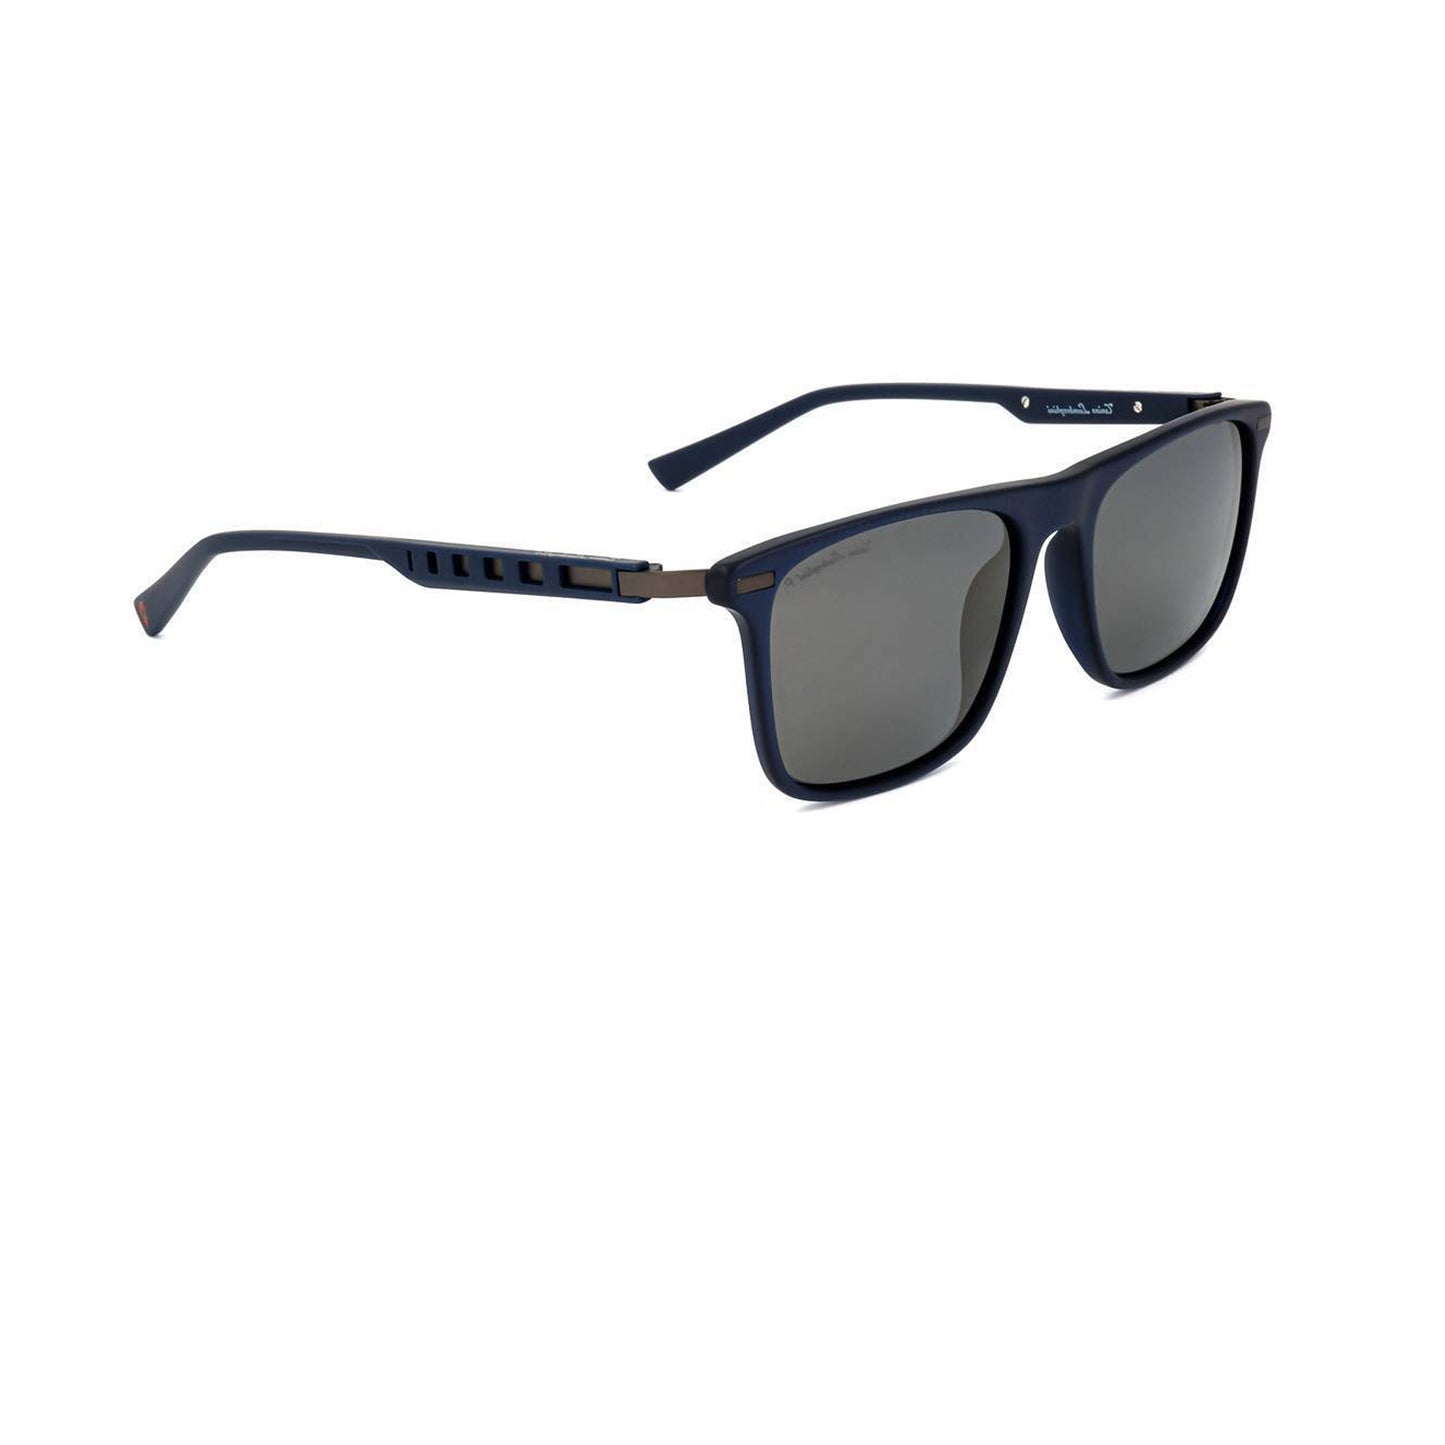 Tonino Lamborghini Blue Square Acetate Full Rim Sunglasses TL911-Y22